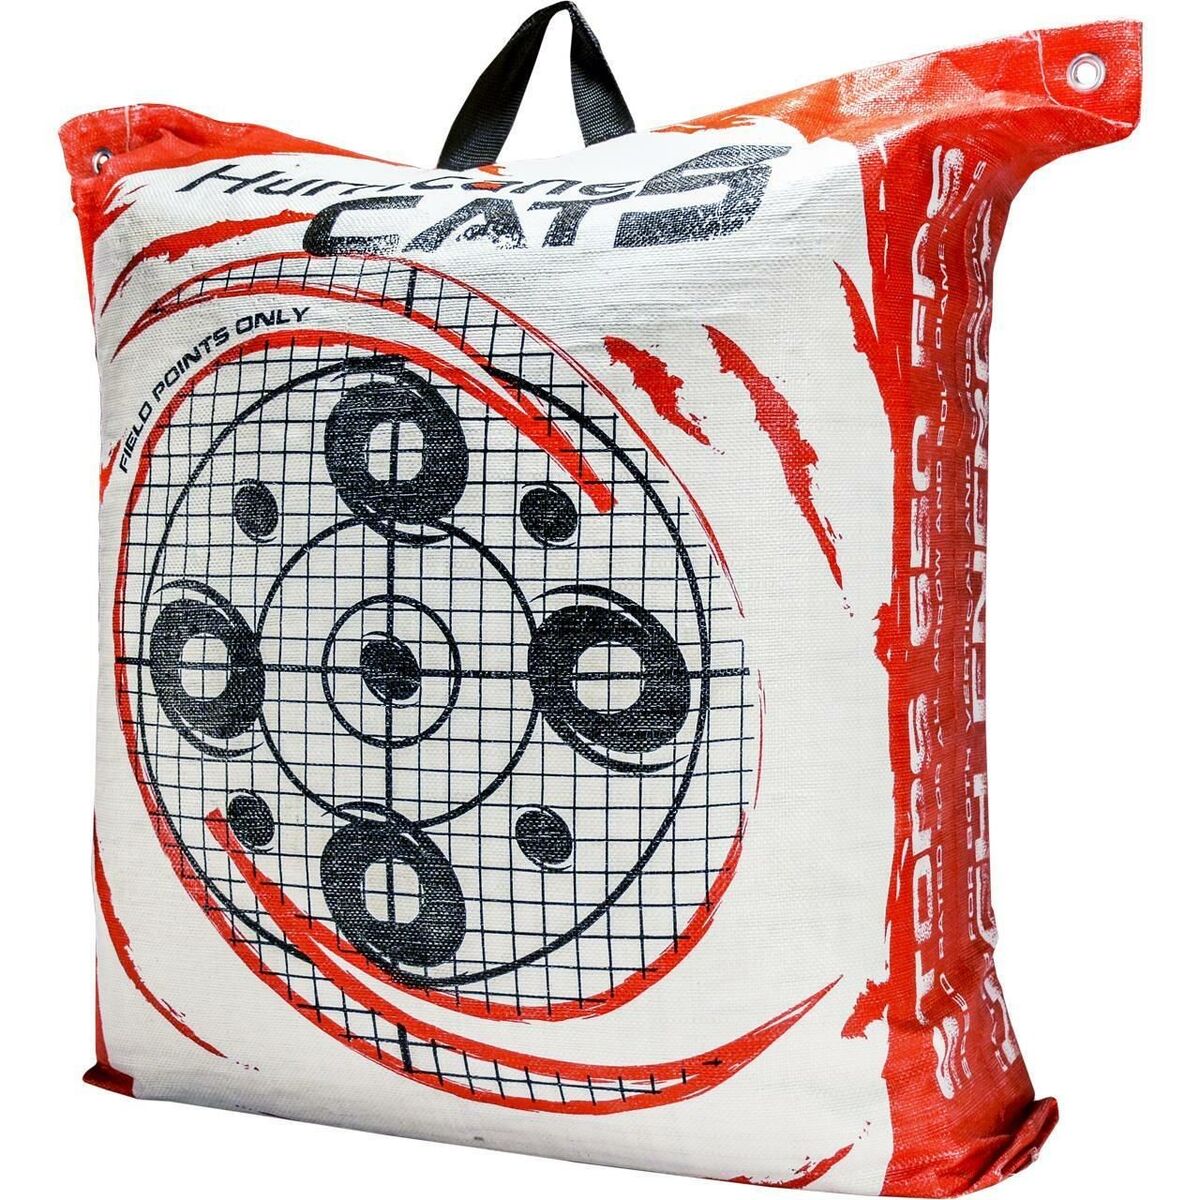 Category 5 High Energy Bag Archery Target